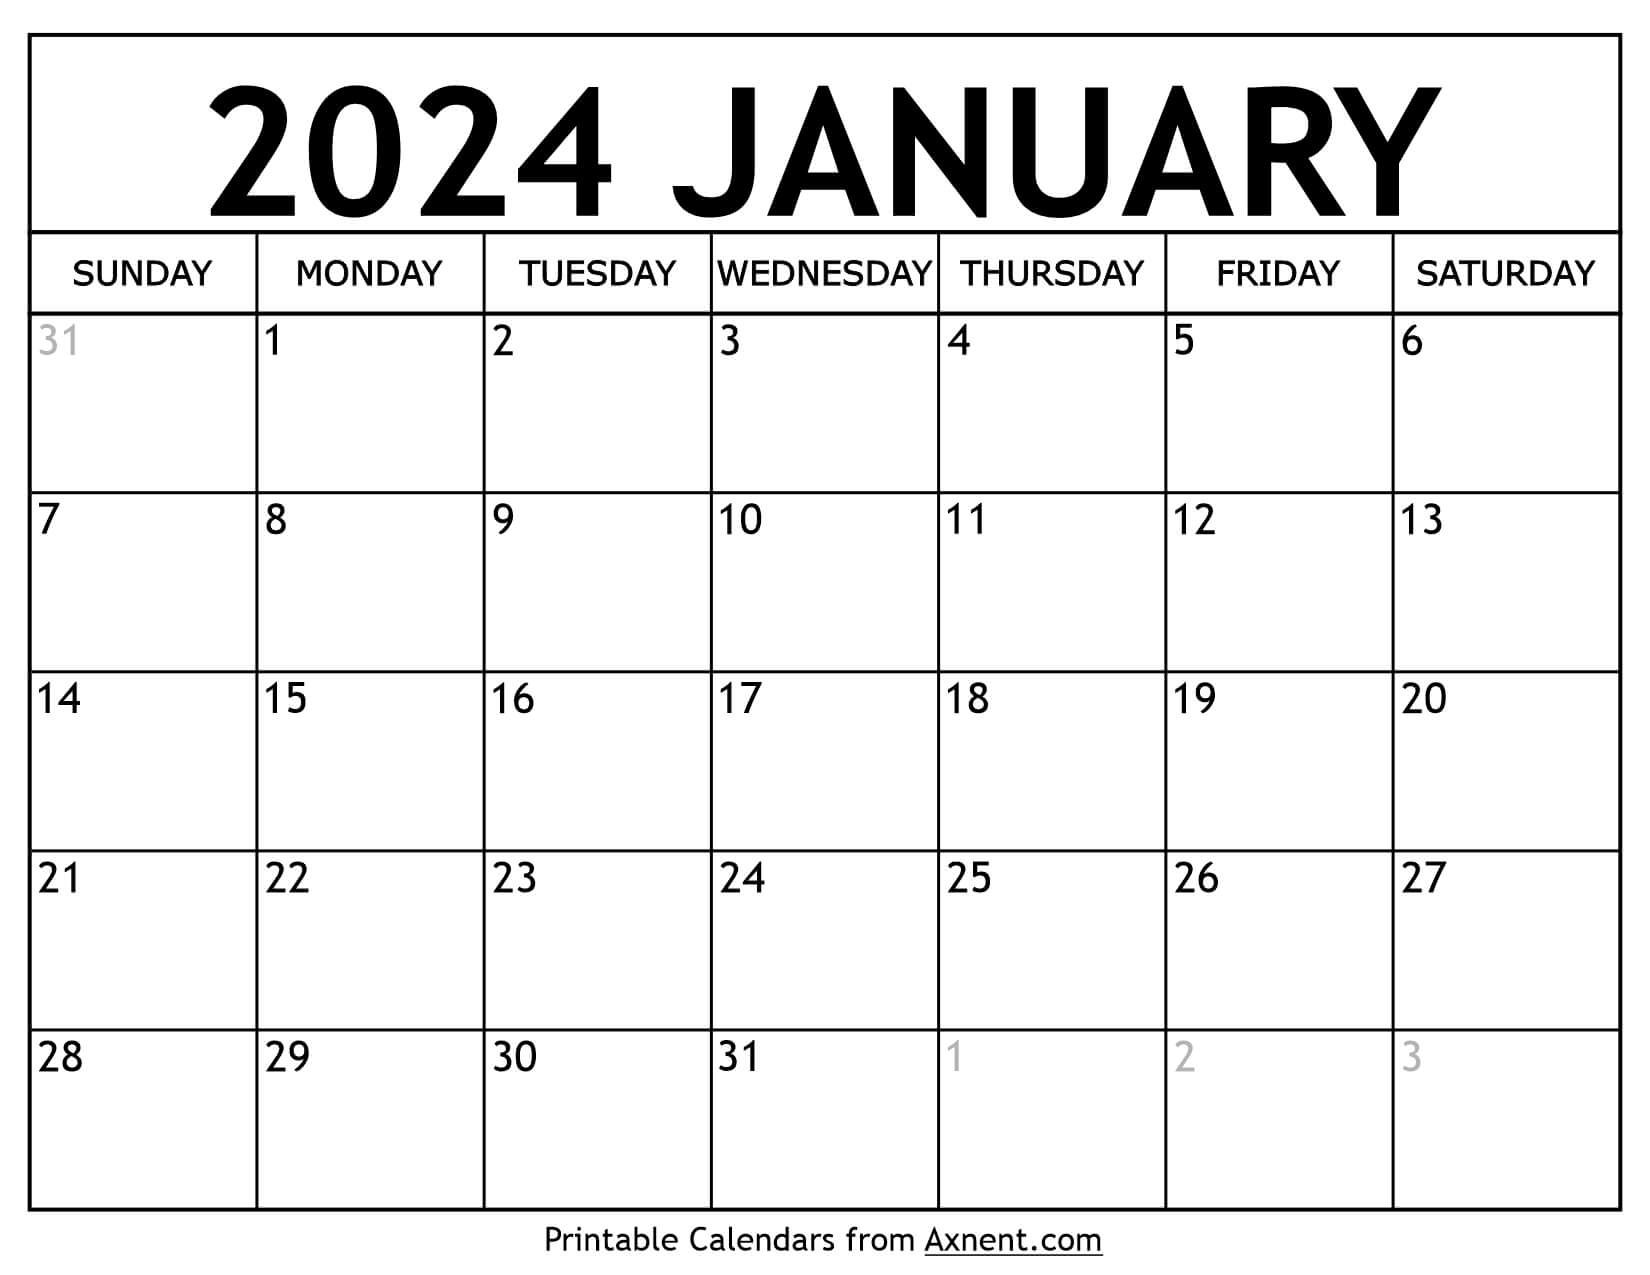 Printable January 2024 Calendar Template - Print Now for January Printable Calendar 2024 Free